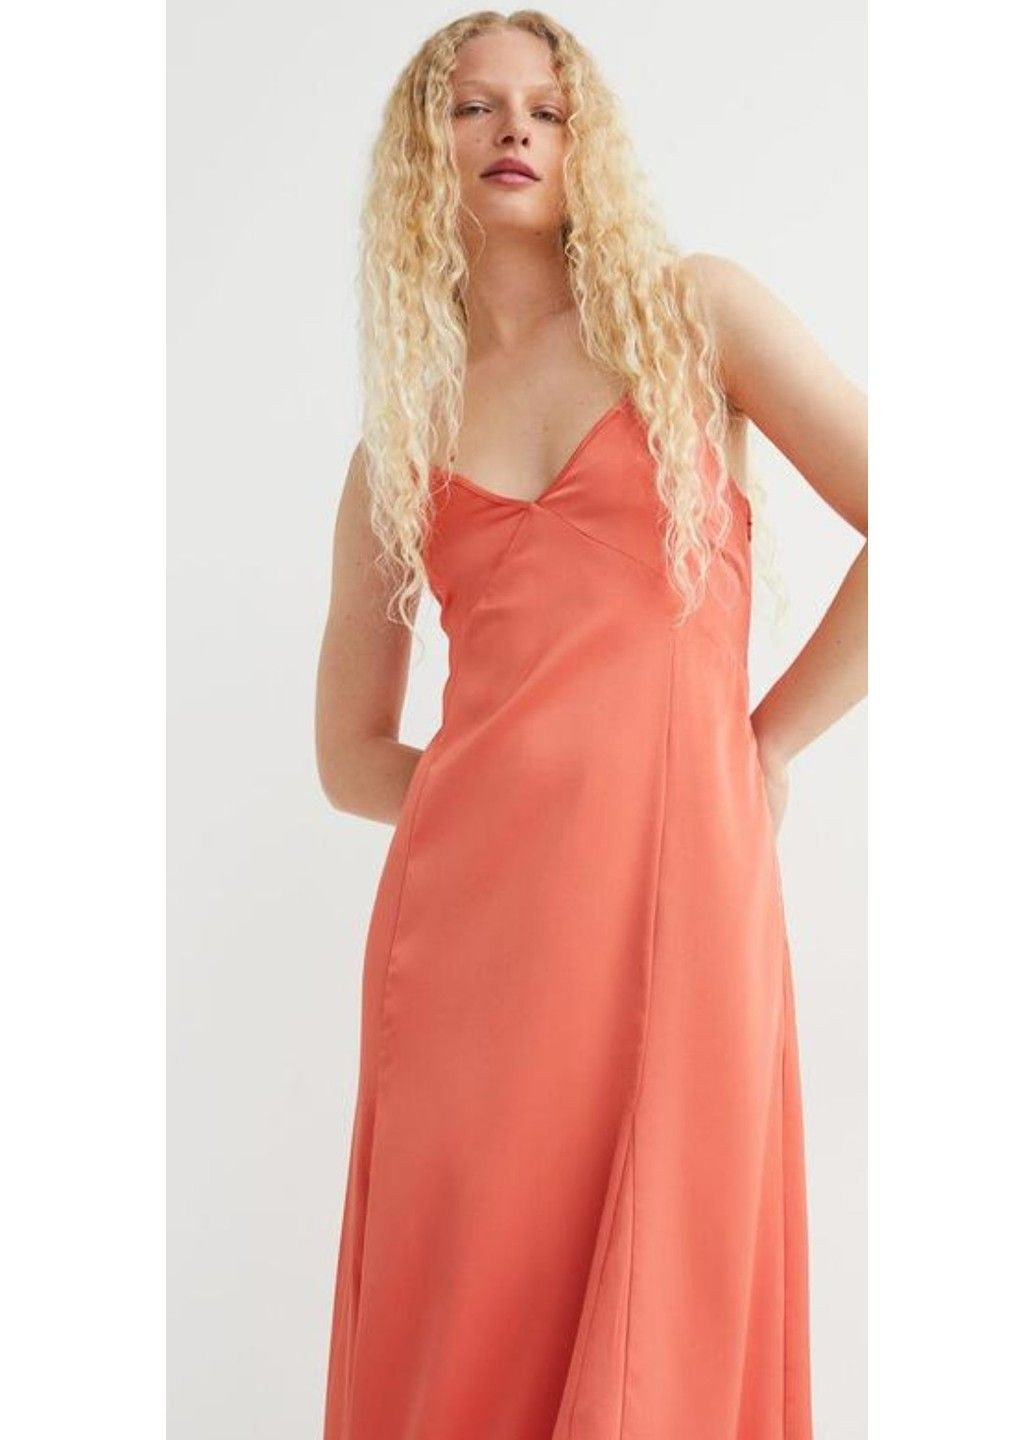 Помаранчева коктейльна жіноча атласна сукня на бретелях н&м (57037) м оранжева H&M